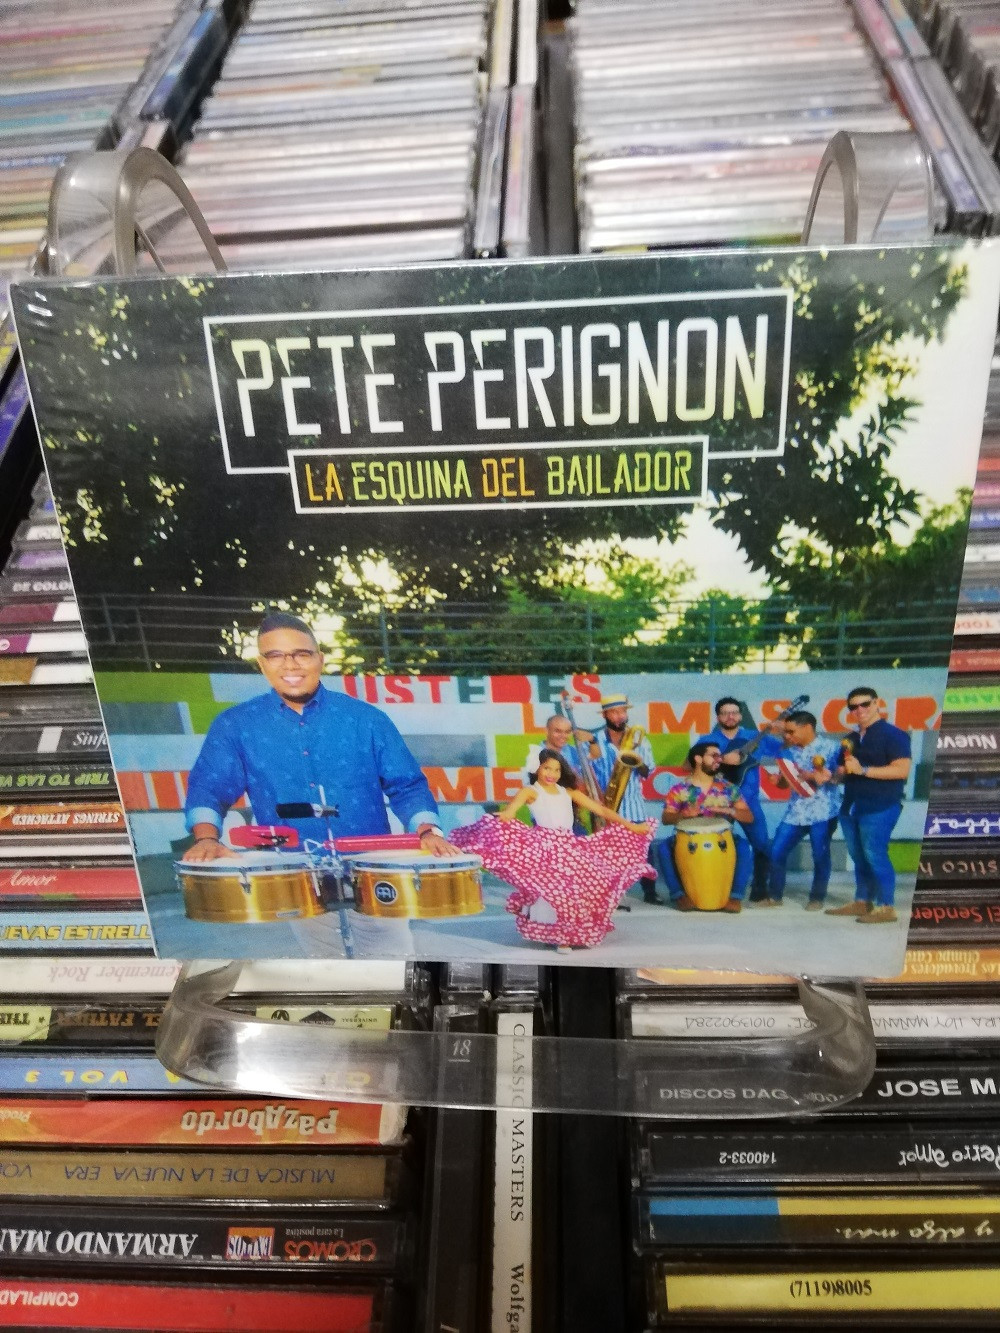 Imagen CD PETE PERIGNON - LA ESQUINA DEL BAILADOR